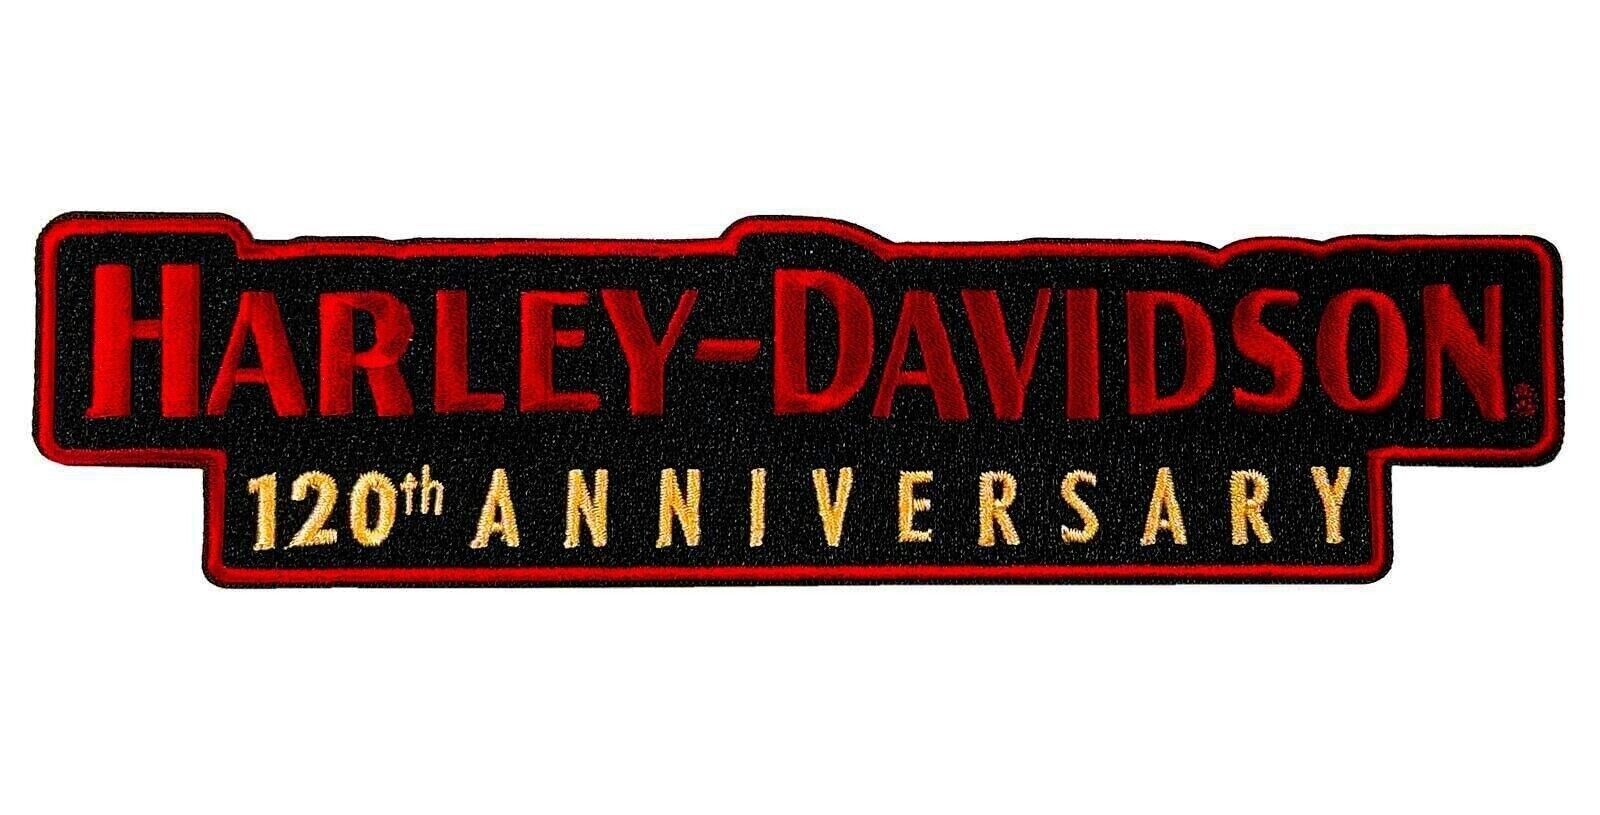 Harley Davidson 120th Anniversary Rocker Back Emblem Embroidered Sew on Patch